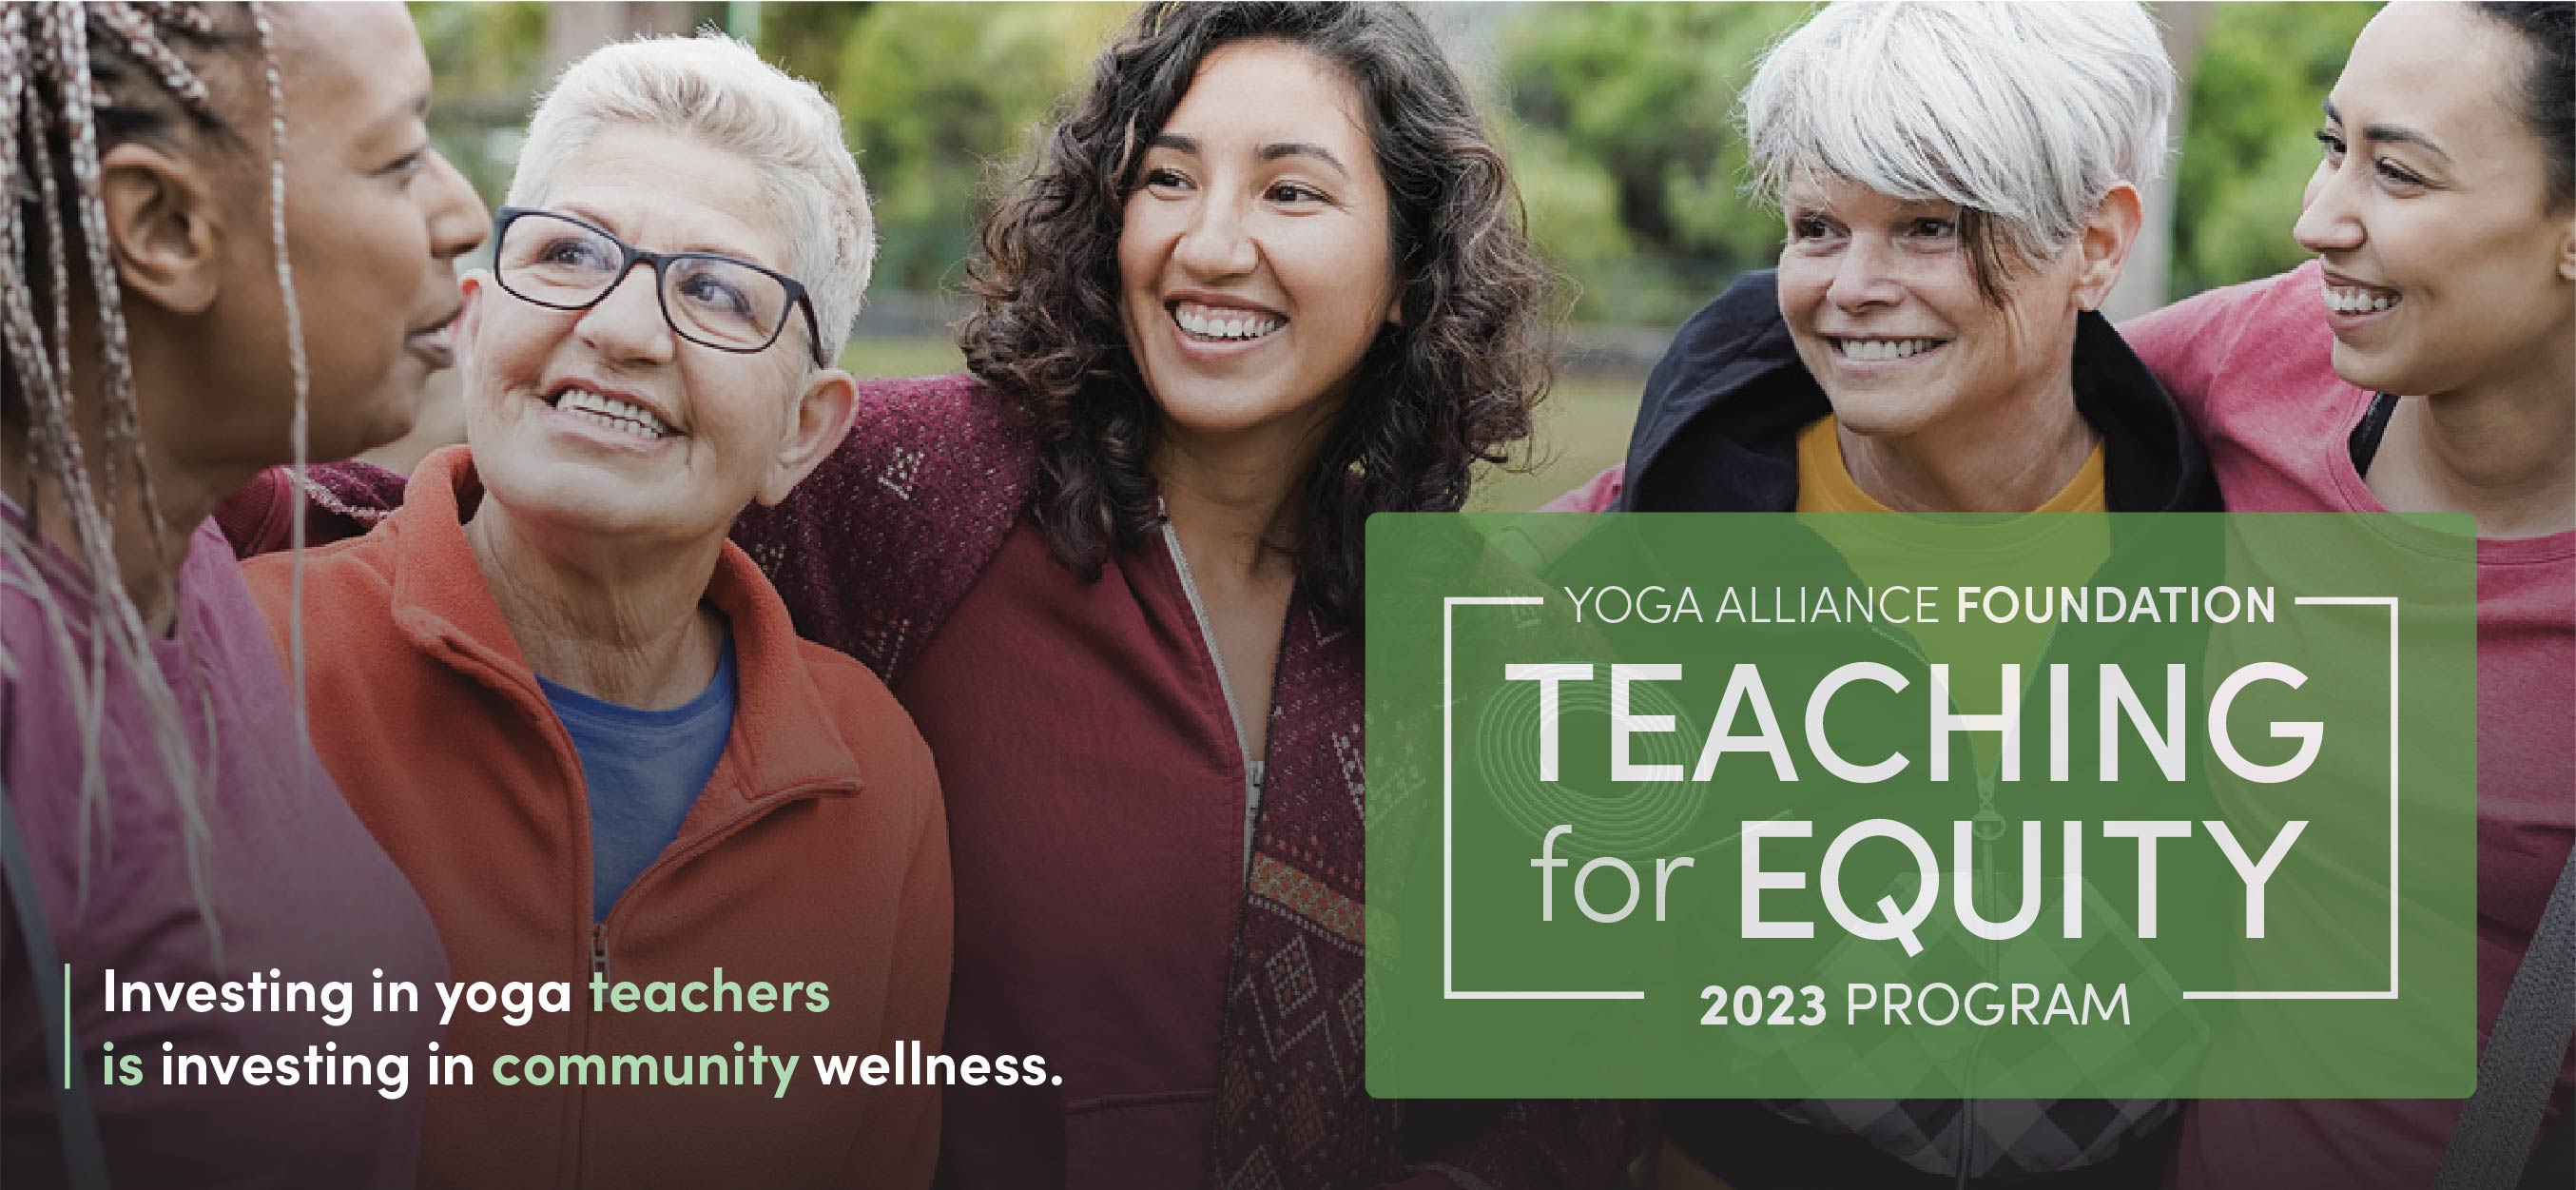 Yoga Alliance Foundatiion Teaching for Equity 2023 Program